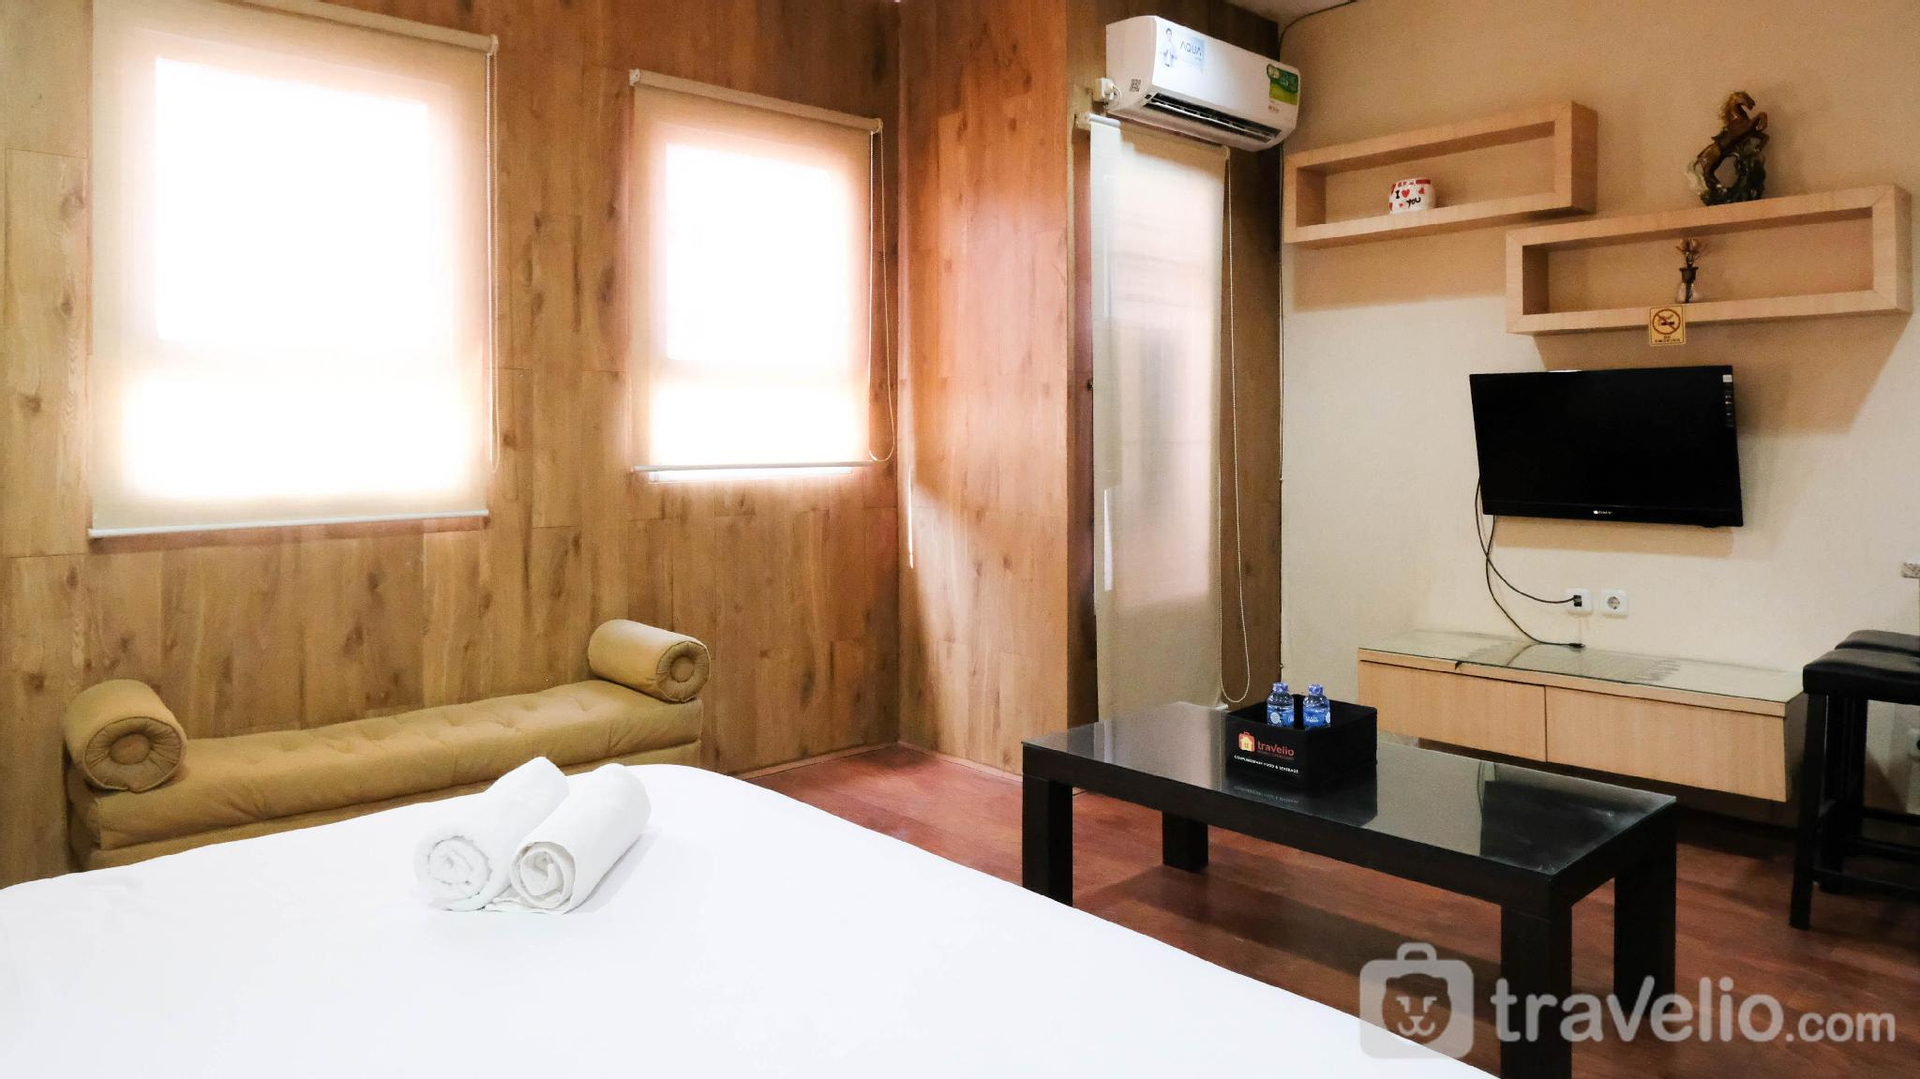 Bedroom 2, Spacious Japanese Style Studio at Puncak Permai Apartment By Travelio, Surabaya